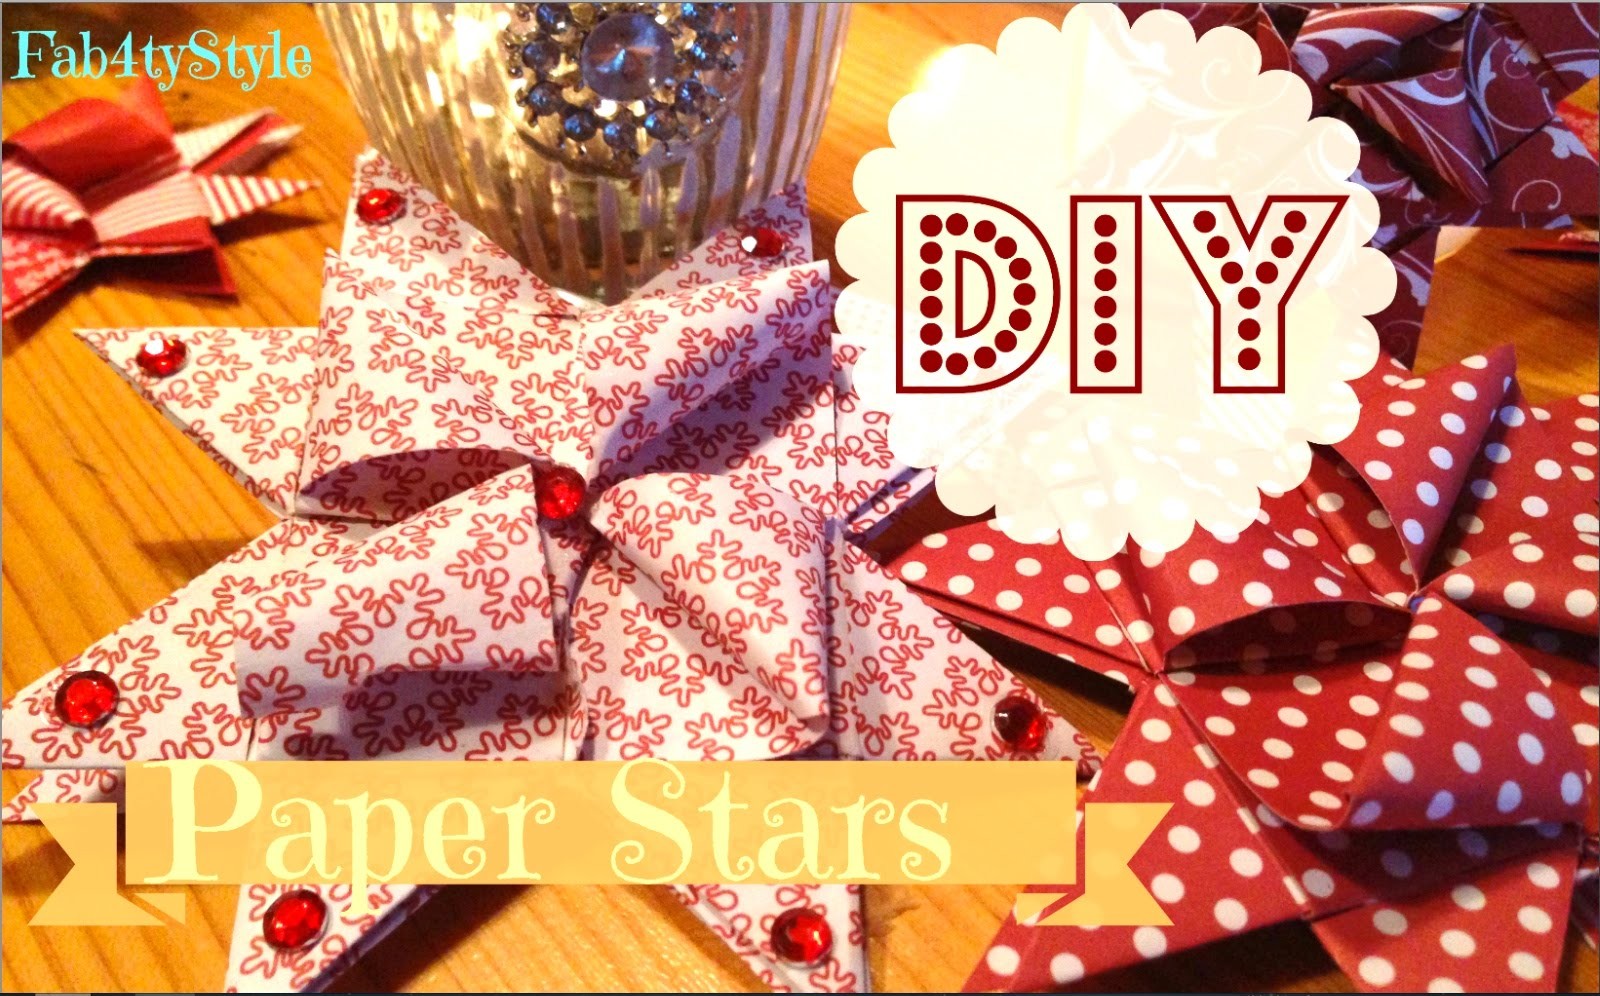 ☆ DIY Papiersterne ☆ Fröbel Sterne ☆ DIY Paper Stars ♥ Fab4tyStyle